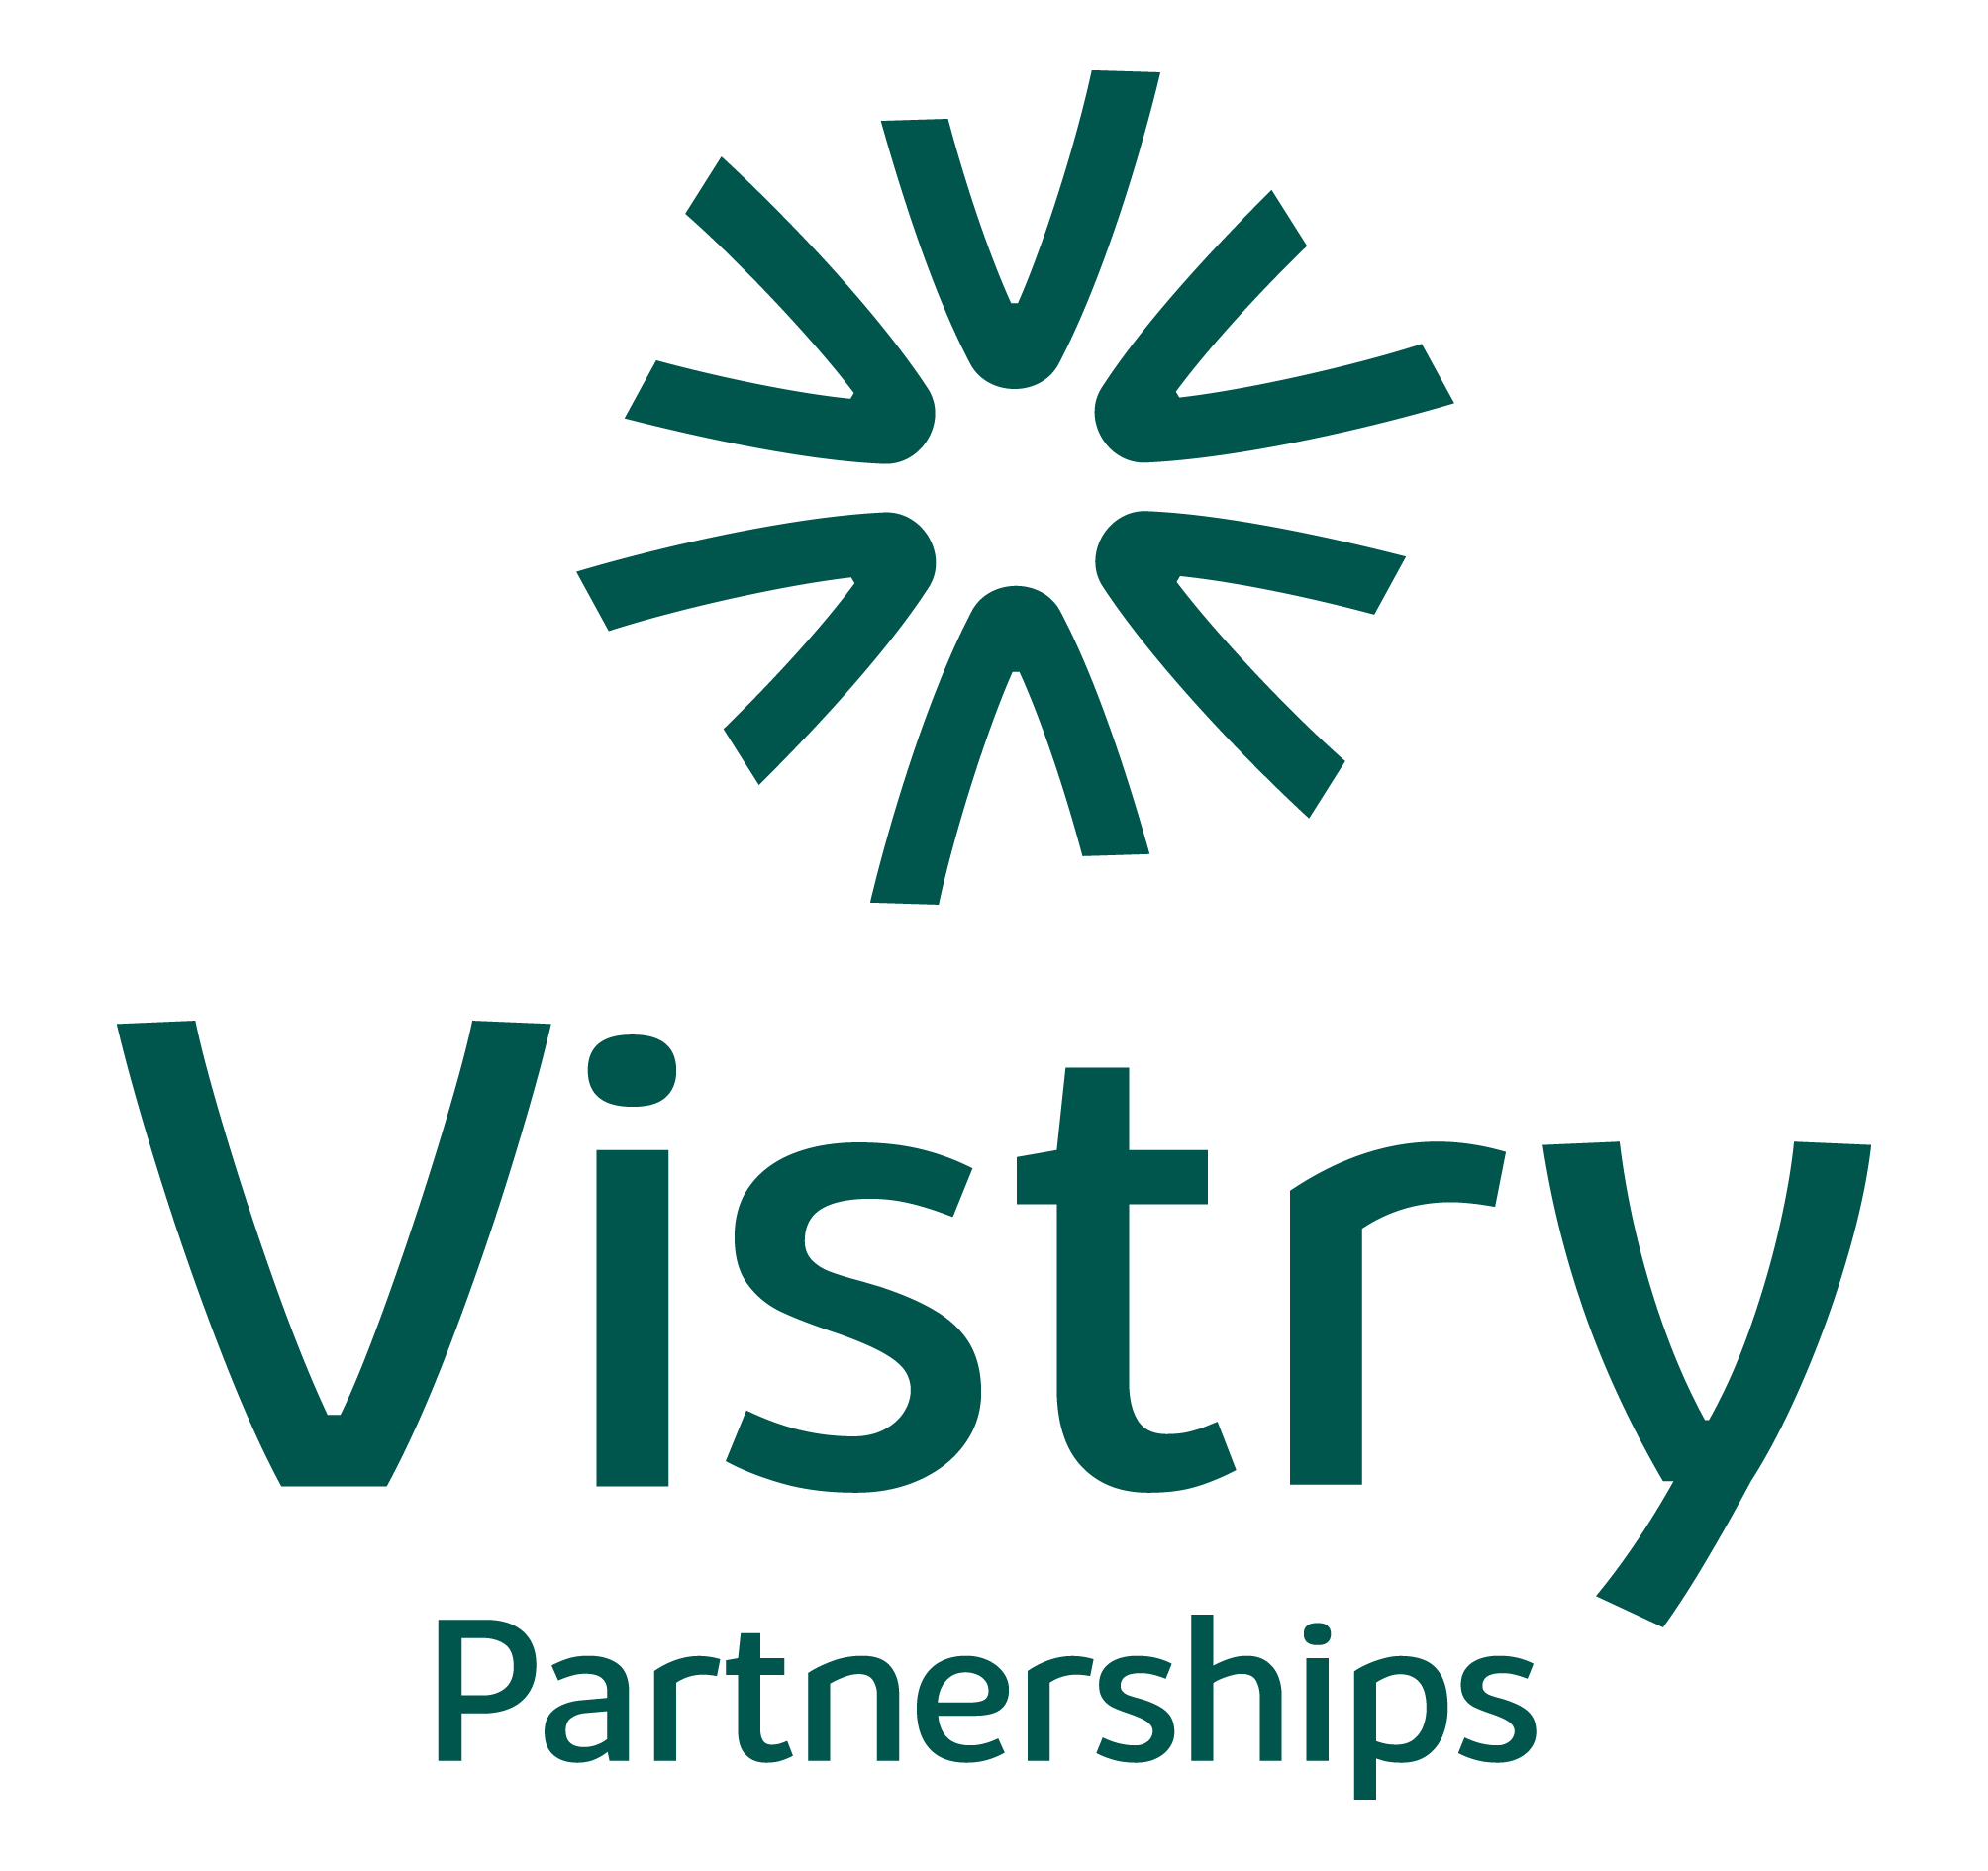 Vistry partnership logo